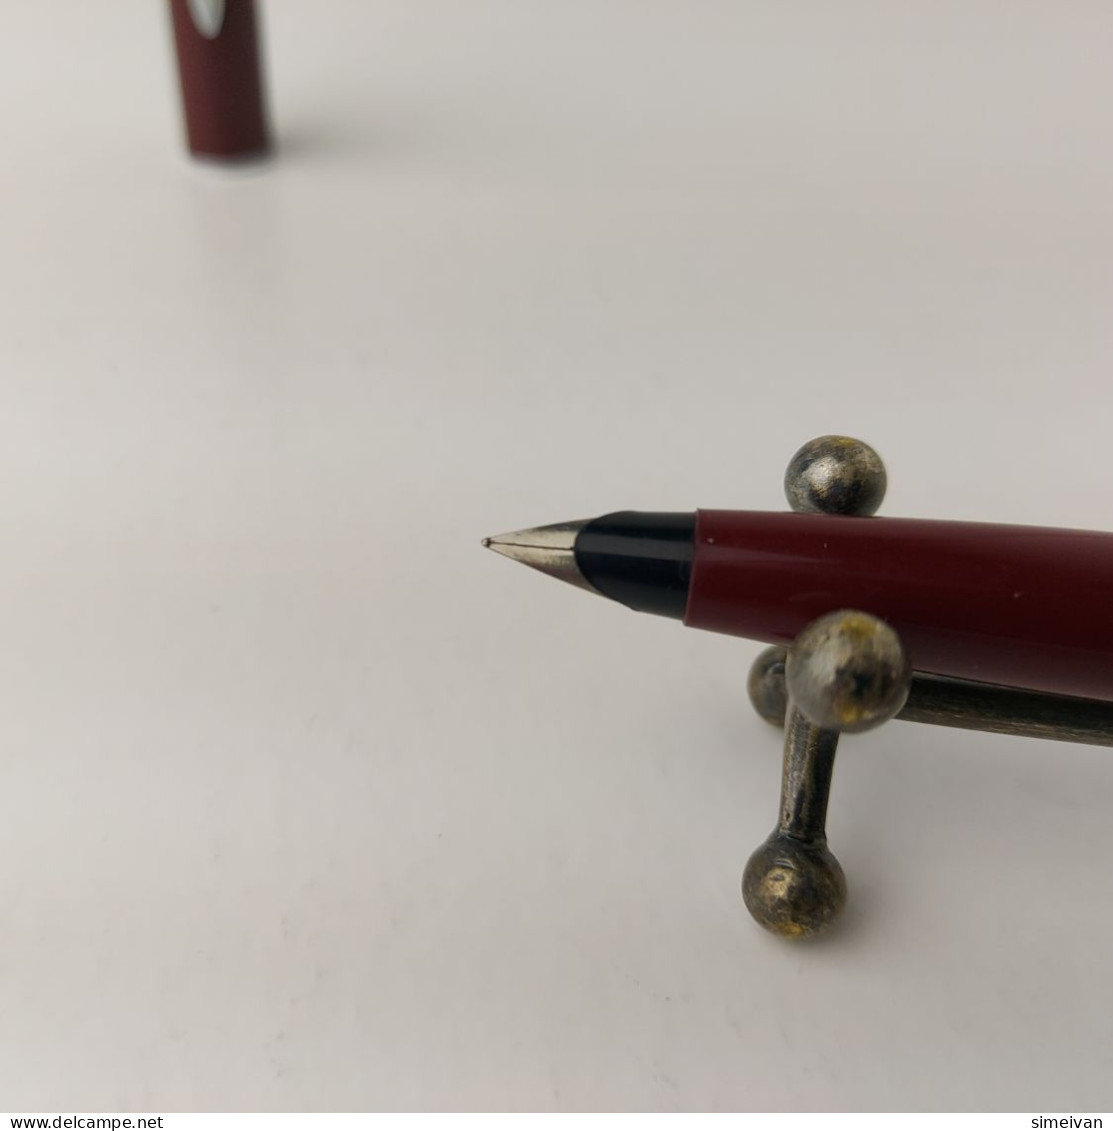 Vintage Fountain Pen Parker 45 Dark Red Chrome Fine Nib Made in England #5481